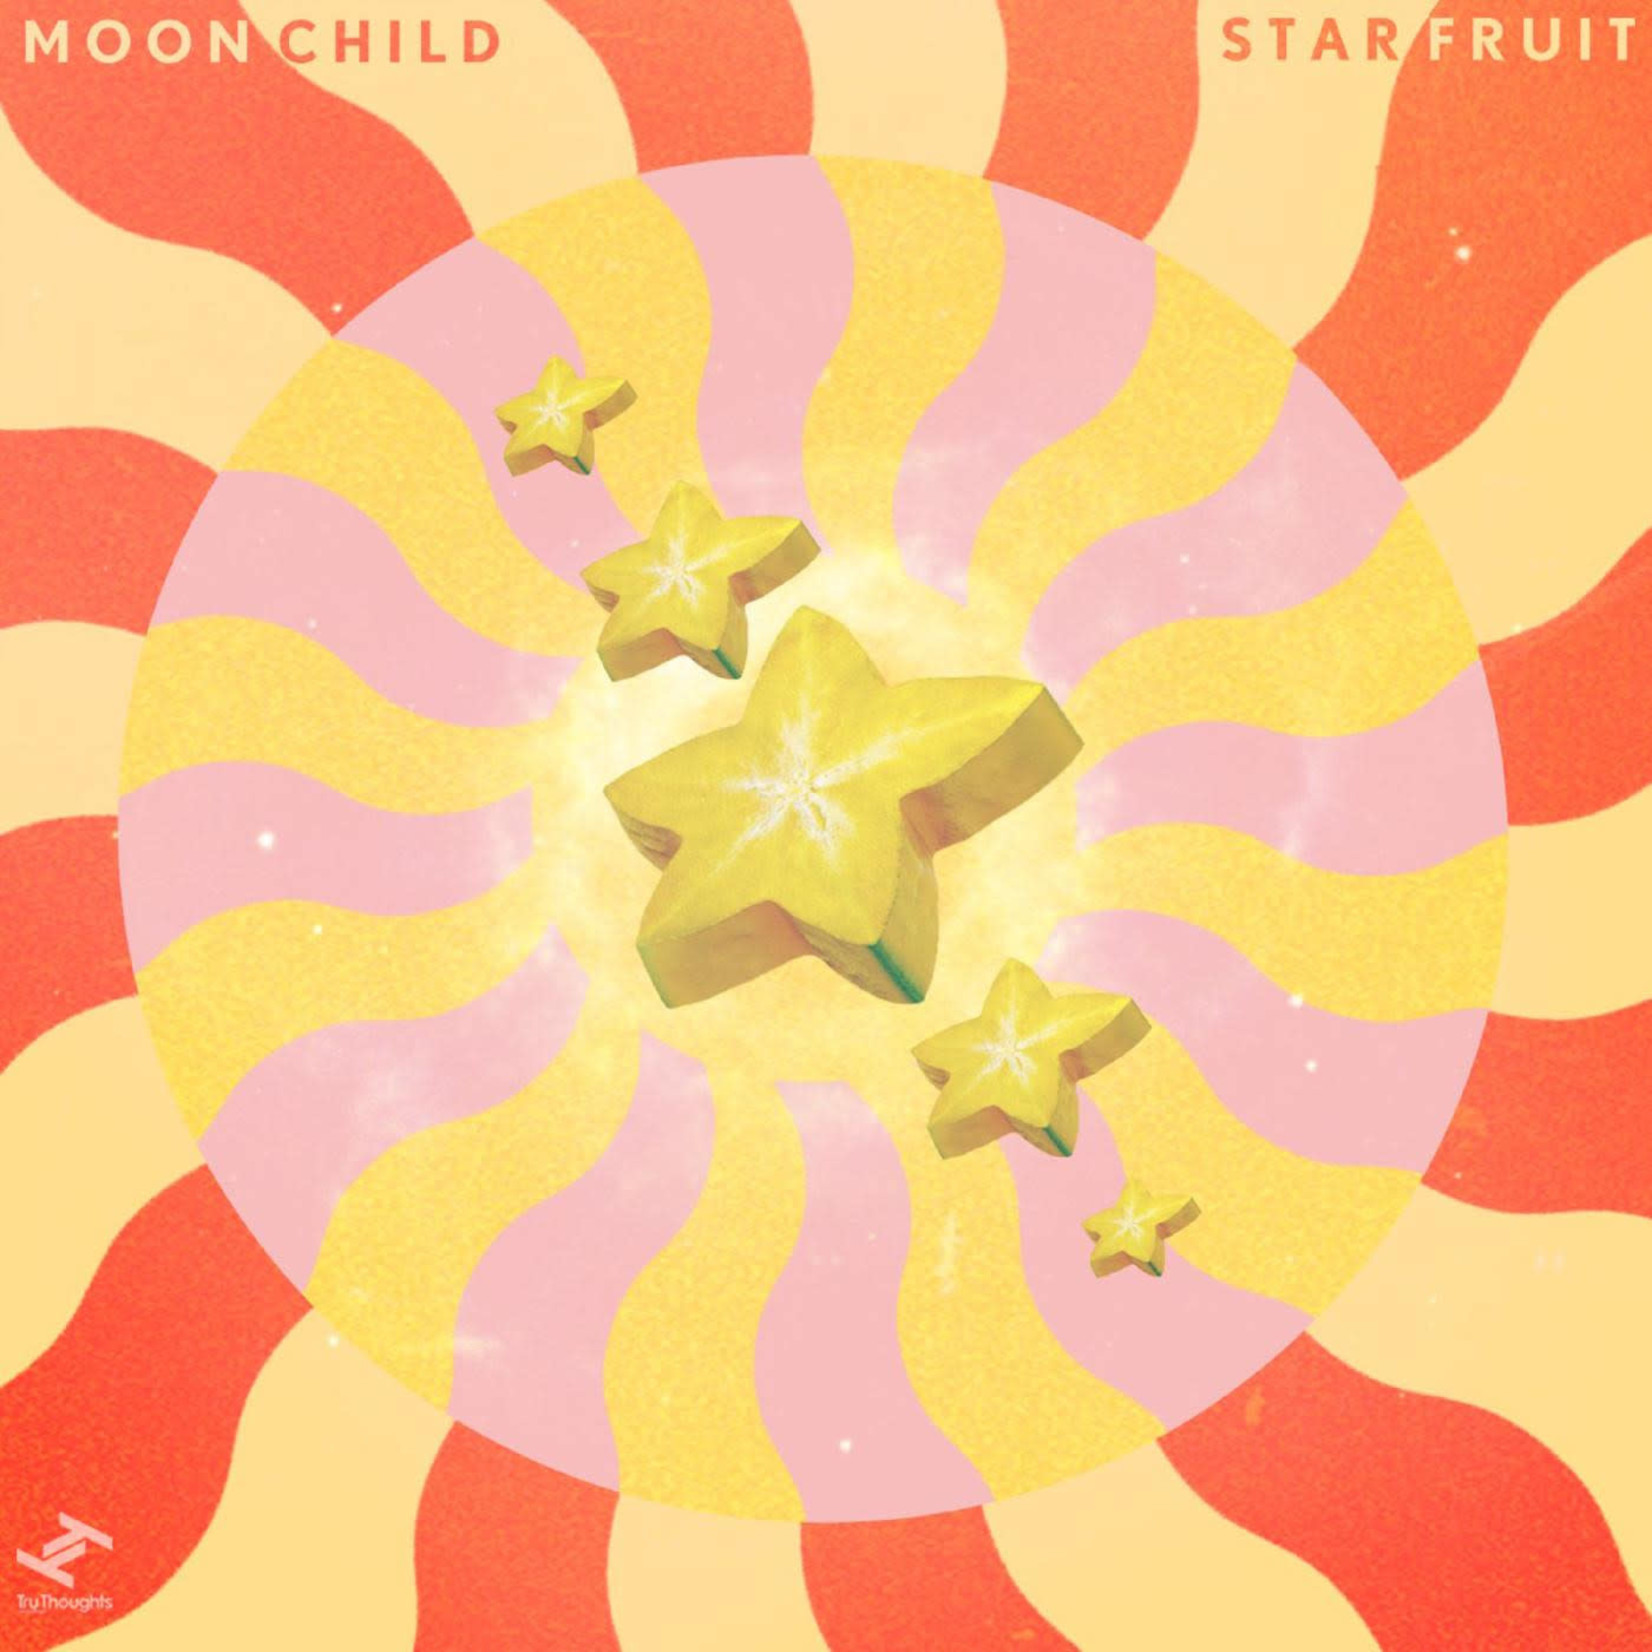 Tru Thoughts Moonchild - Starfruit (LP) [Marble]